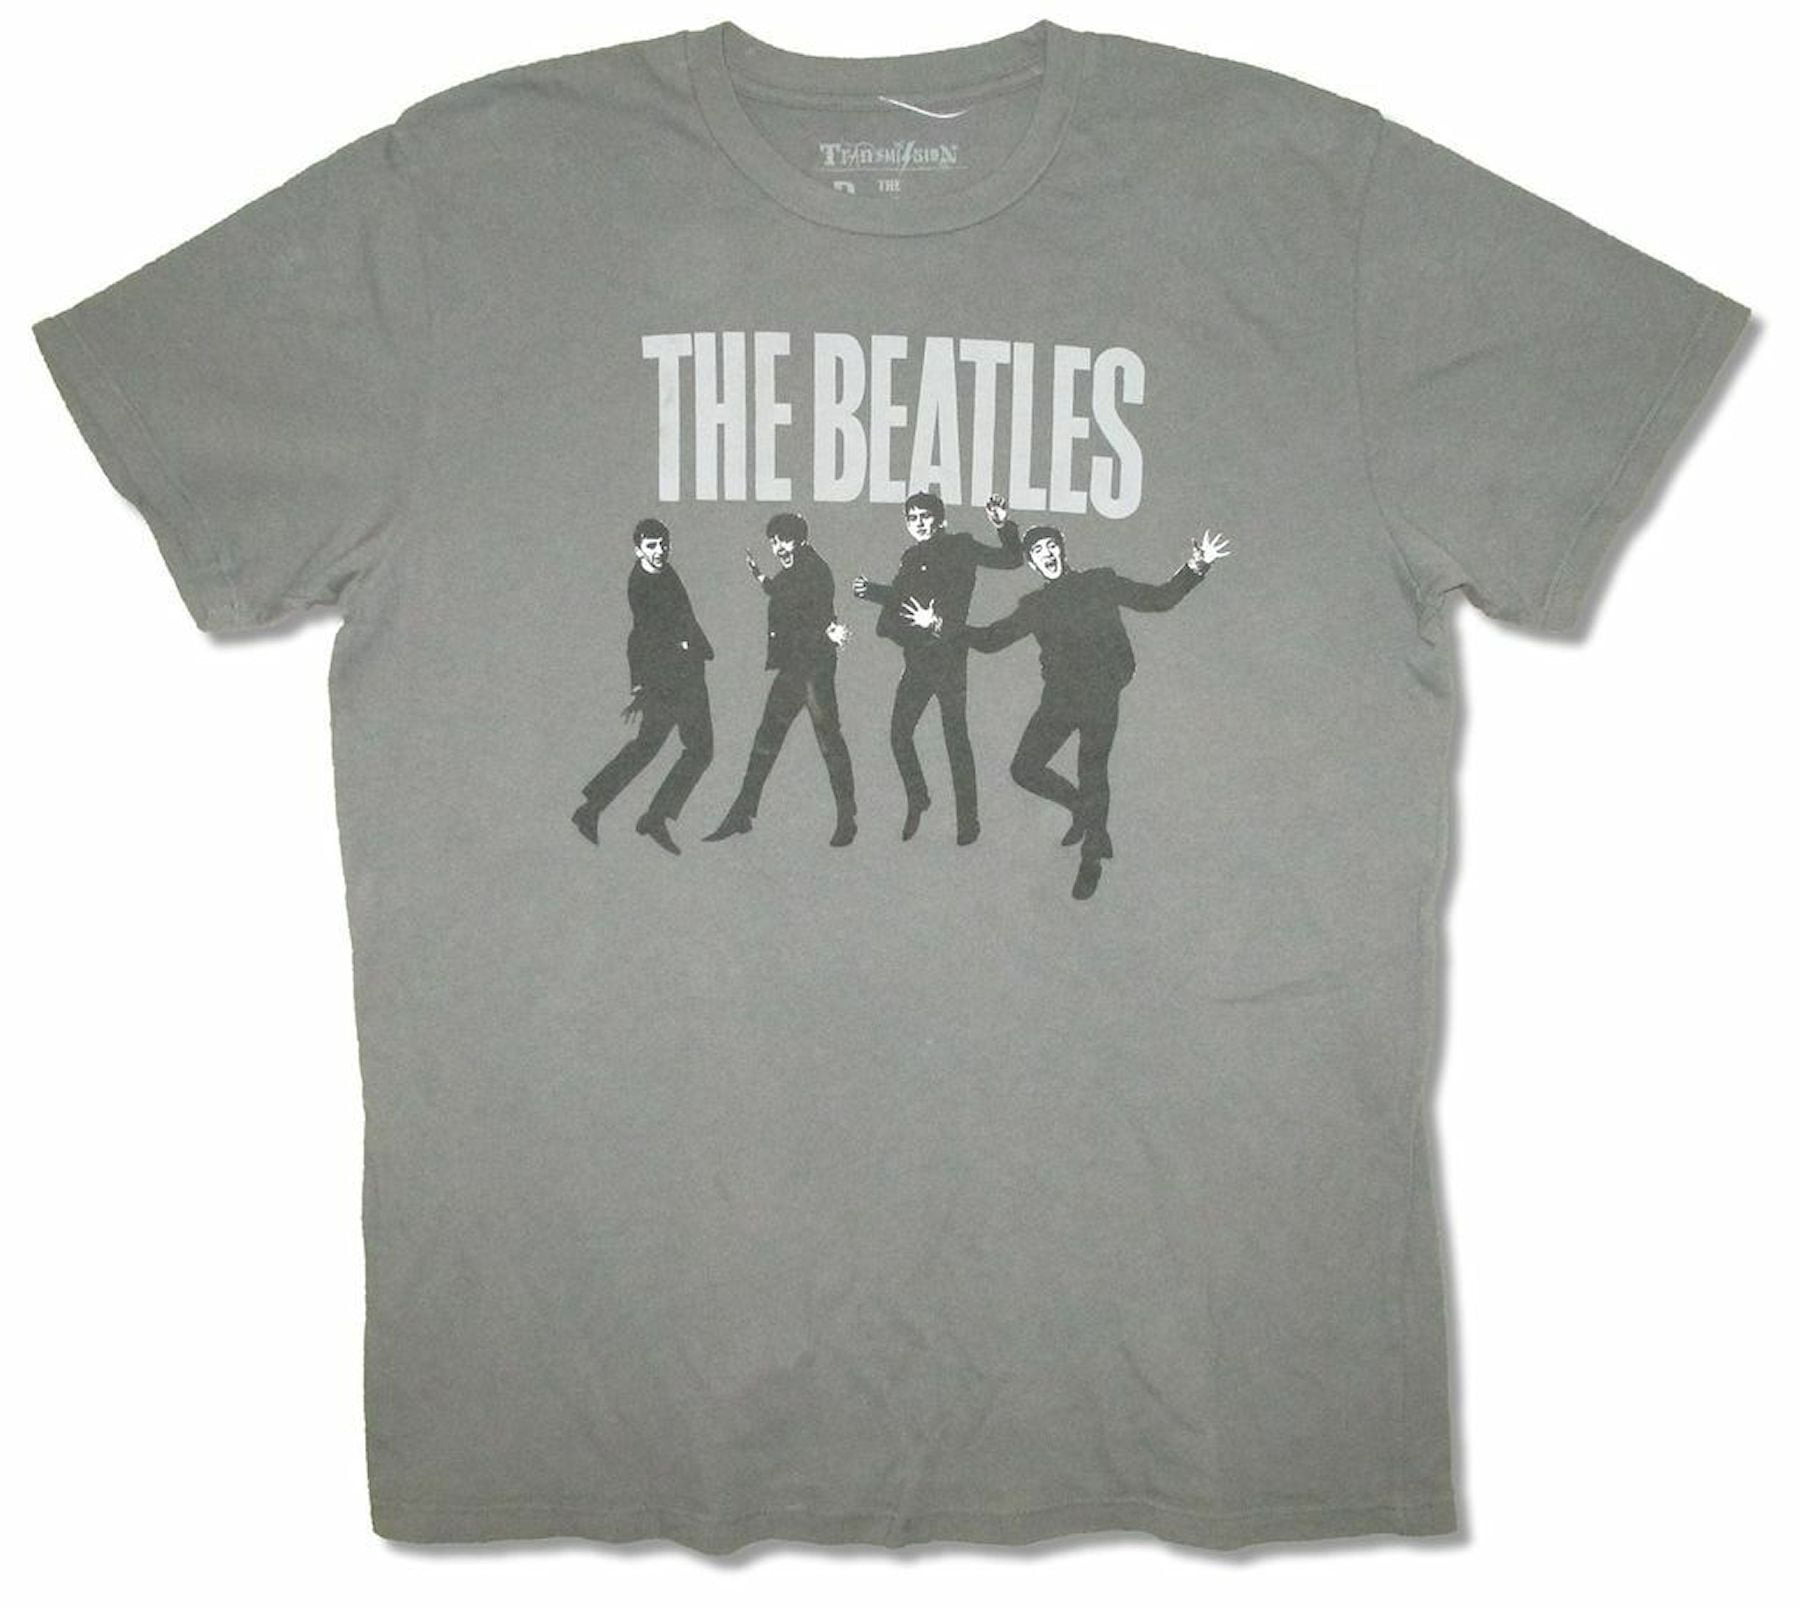 The Beatles - Beatles Jumping Image Charcoal Grey T Shirt - Walmart.com ...